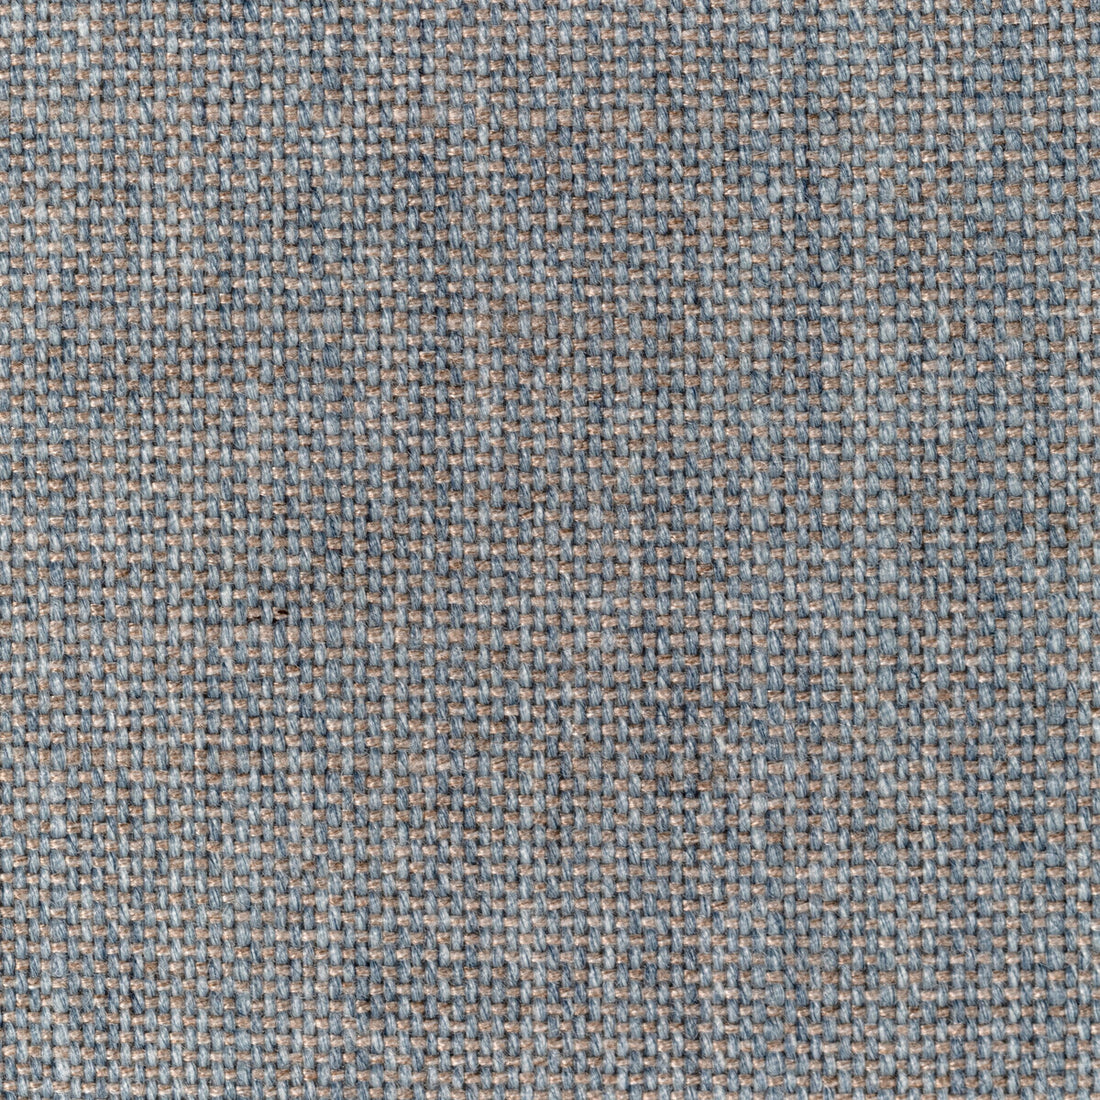 Kravet Smart fabric in 36112-121 color - pattern 36112.121.0 - by Kravet Smart in the Performance Kravetarmor collection